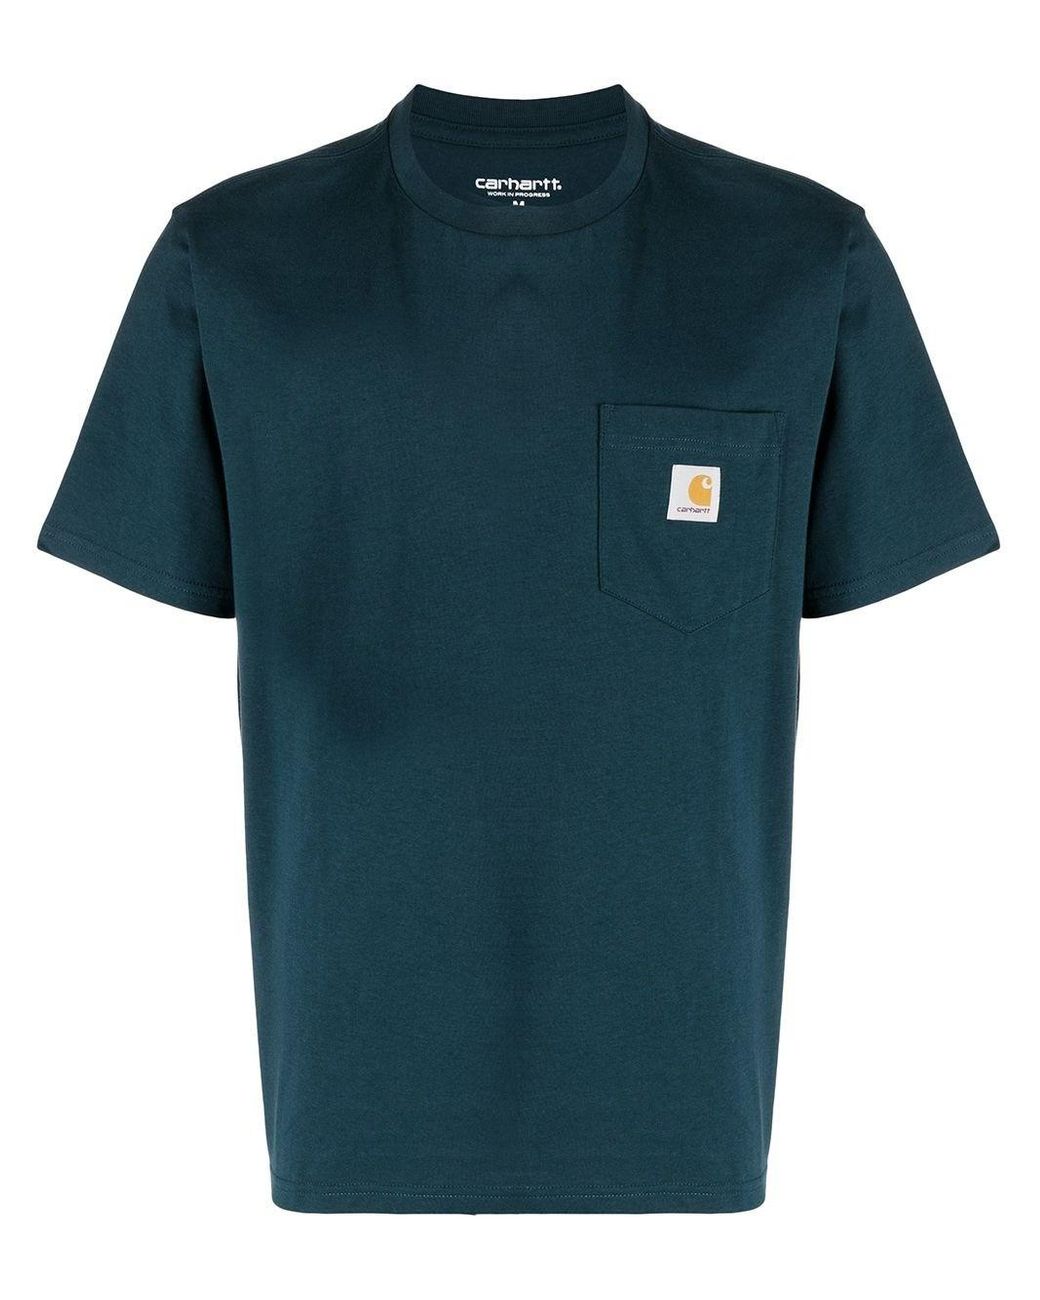 Carhartt Cotton Logo Chest Pocket T-shirt in Green for Men - Save 25% ...